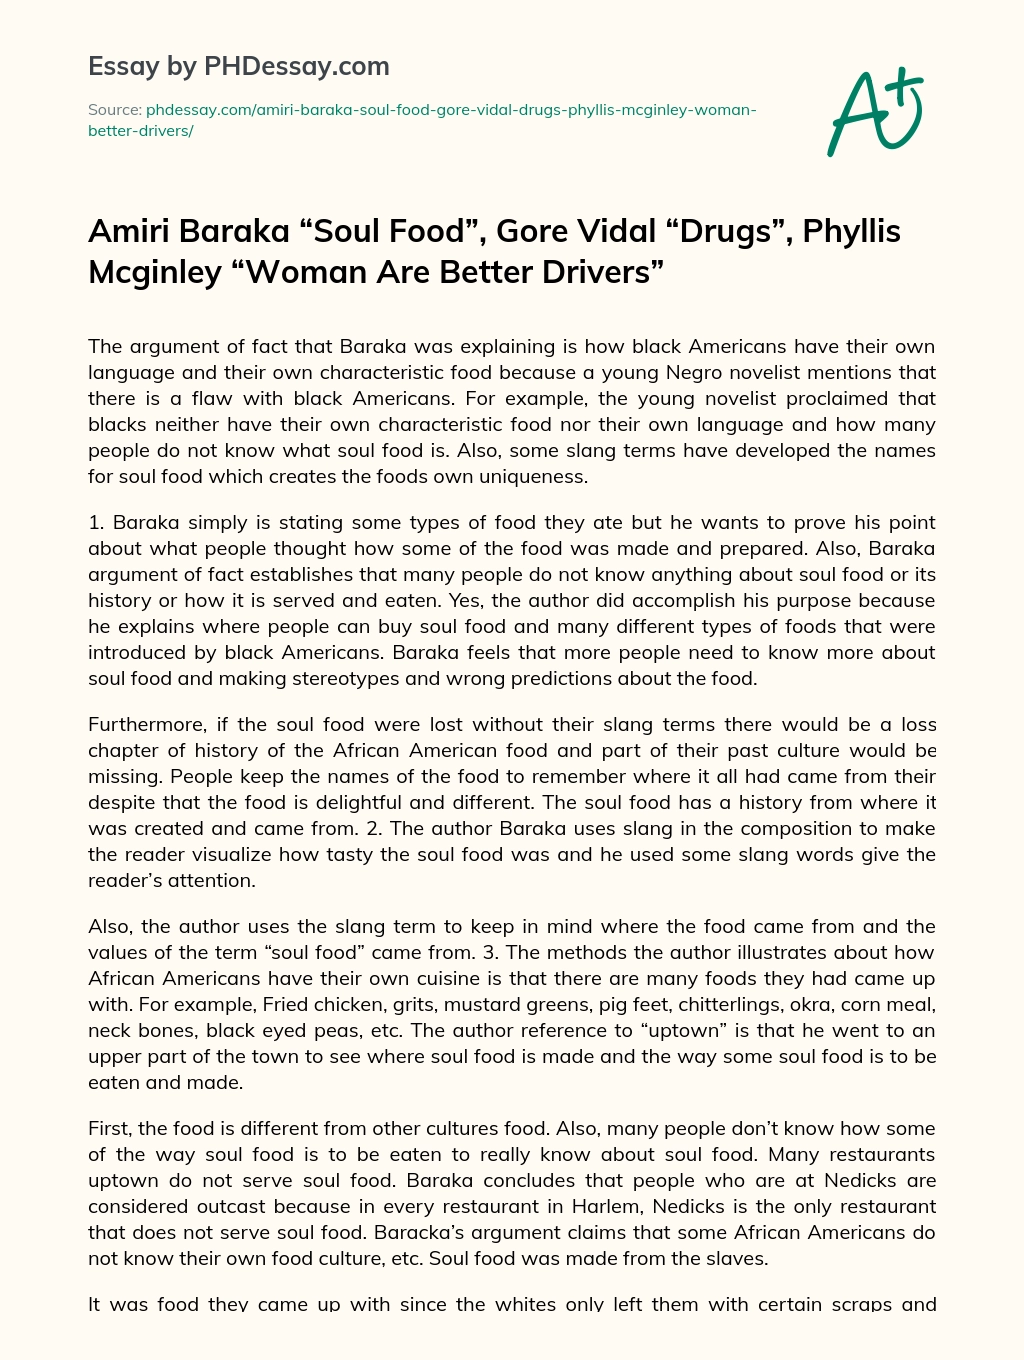 Amiri Baraka “Soul Food”, Gore Vidal “Drugs”, Phyllis Mcginley “Woman Are Better Drivers” essay